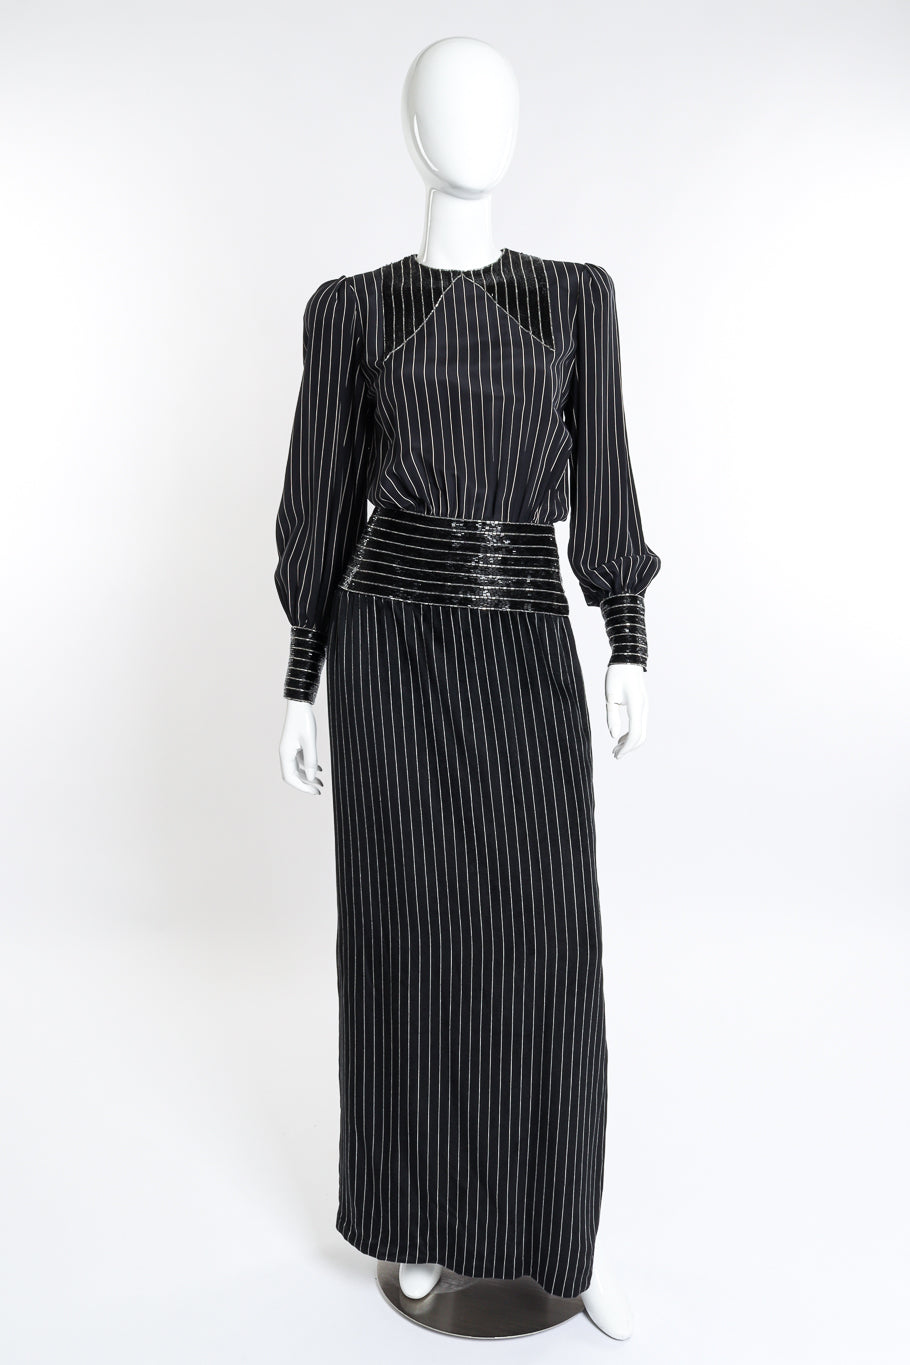 Vintage Adele Simpson Beaded Pinstripe Dress front on mannequin @recess la